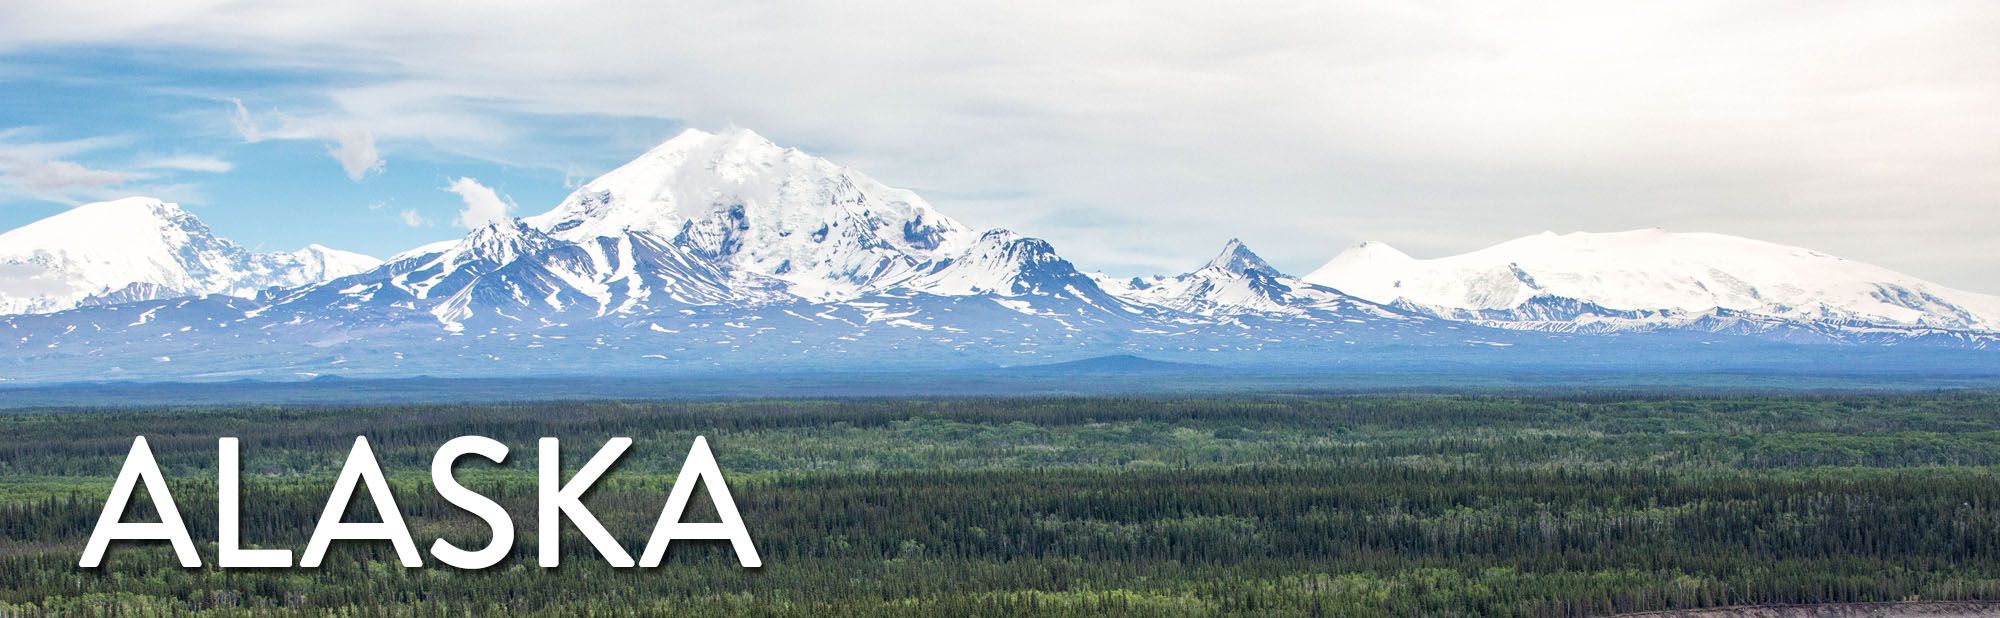 Alaska Travel Guide